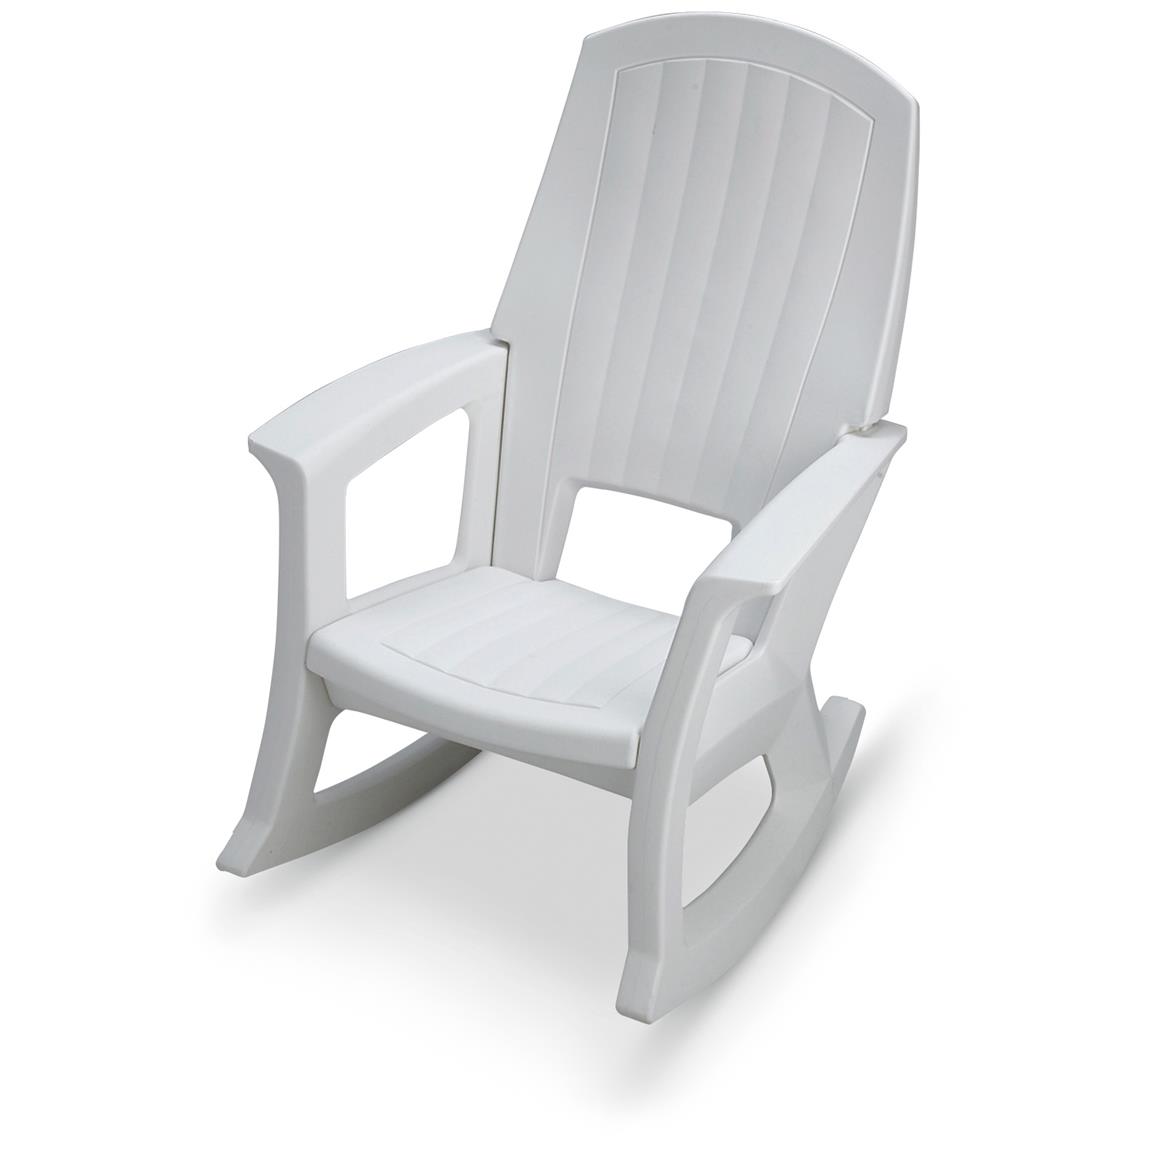 Oversized Resin Rocker / Recliner Chair, White - 647176, Patio